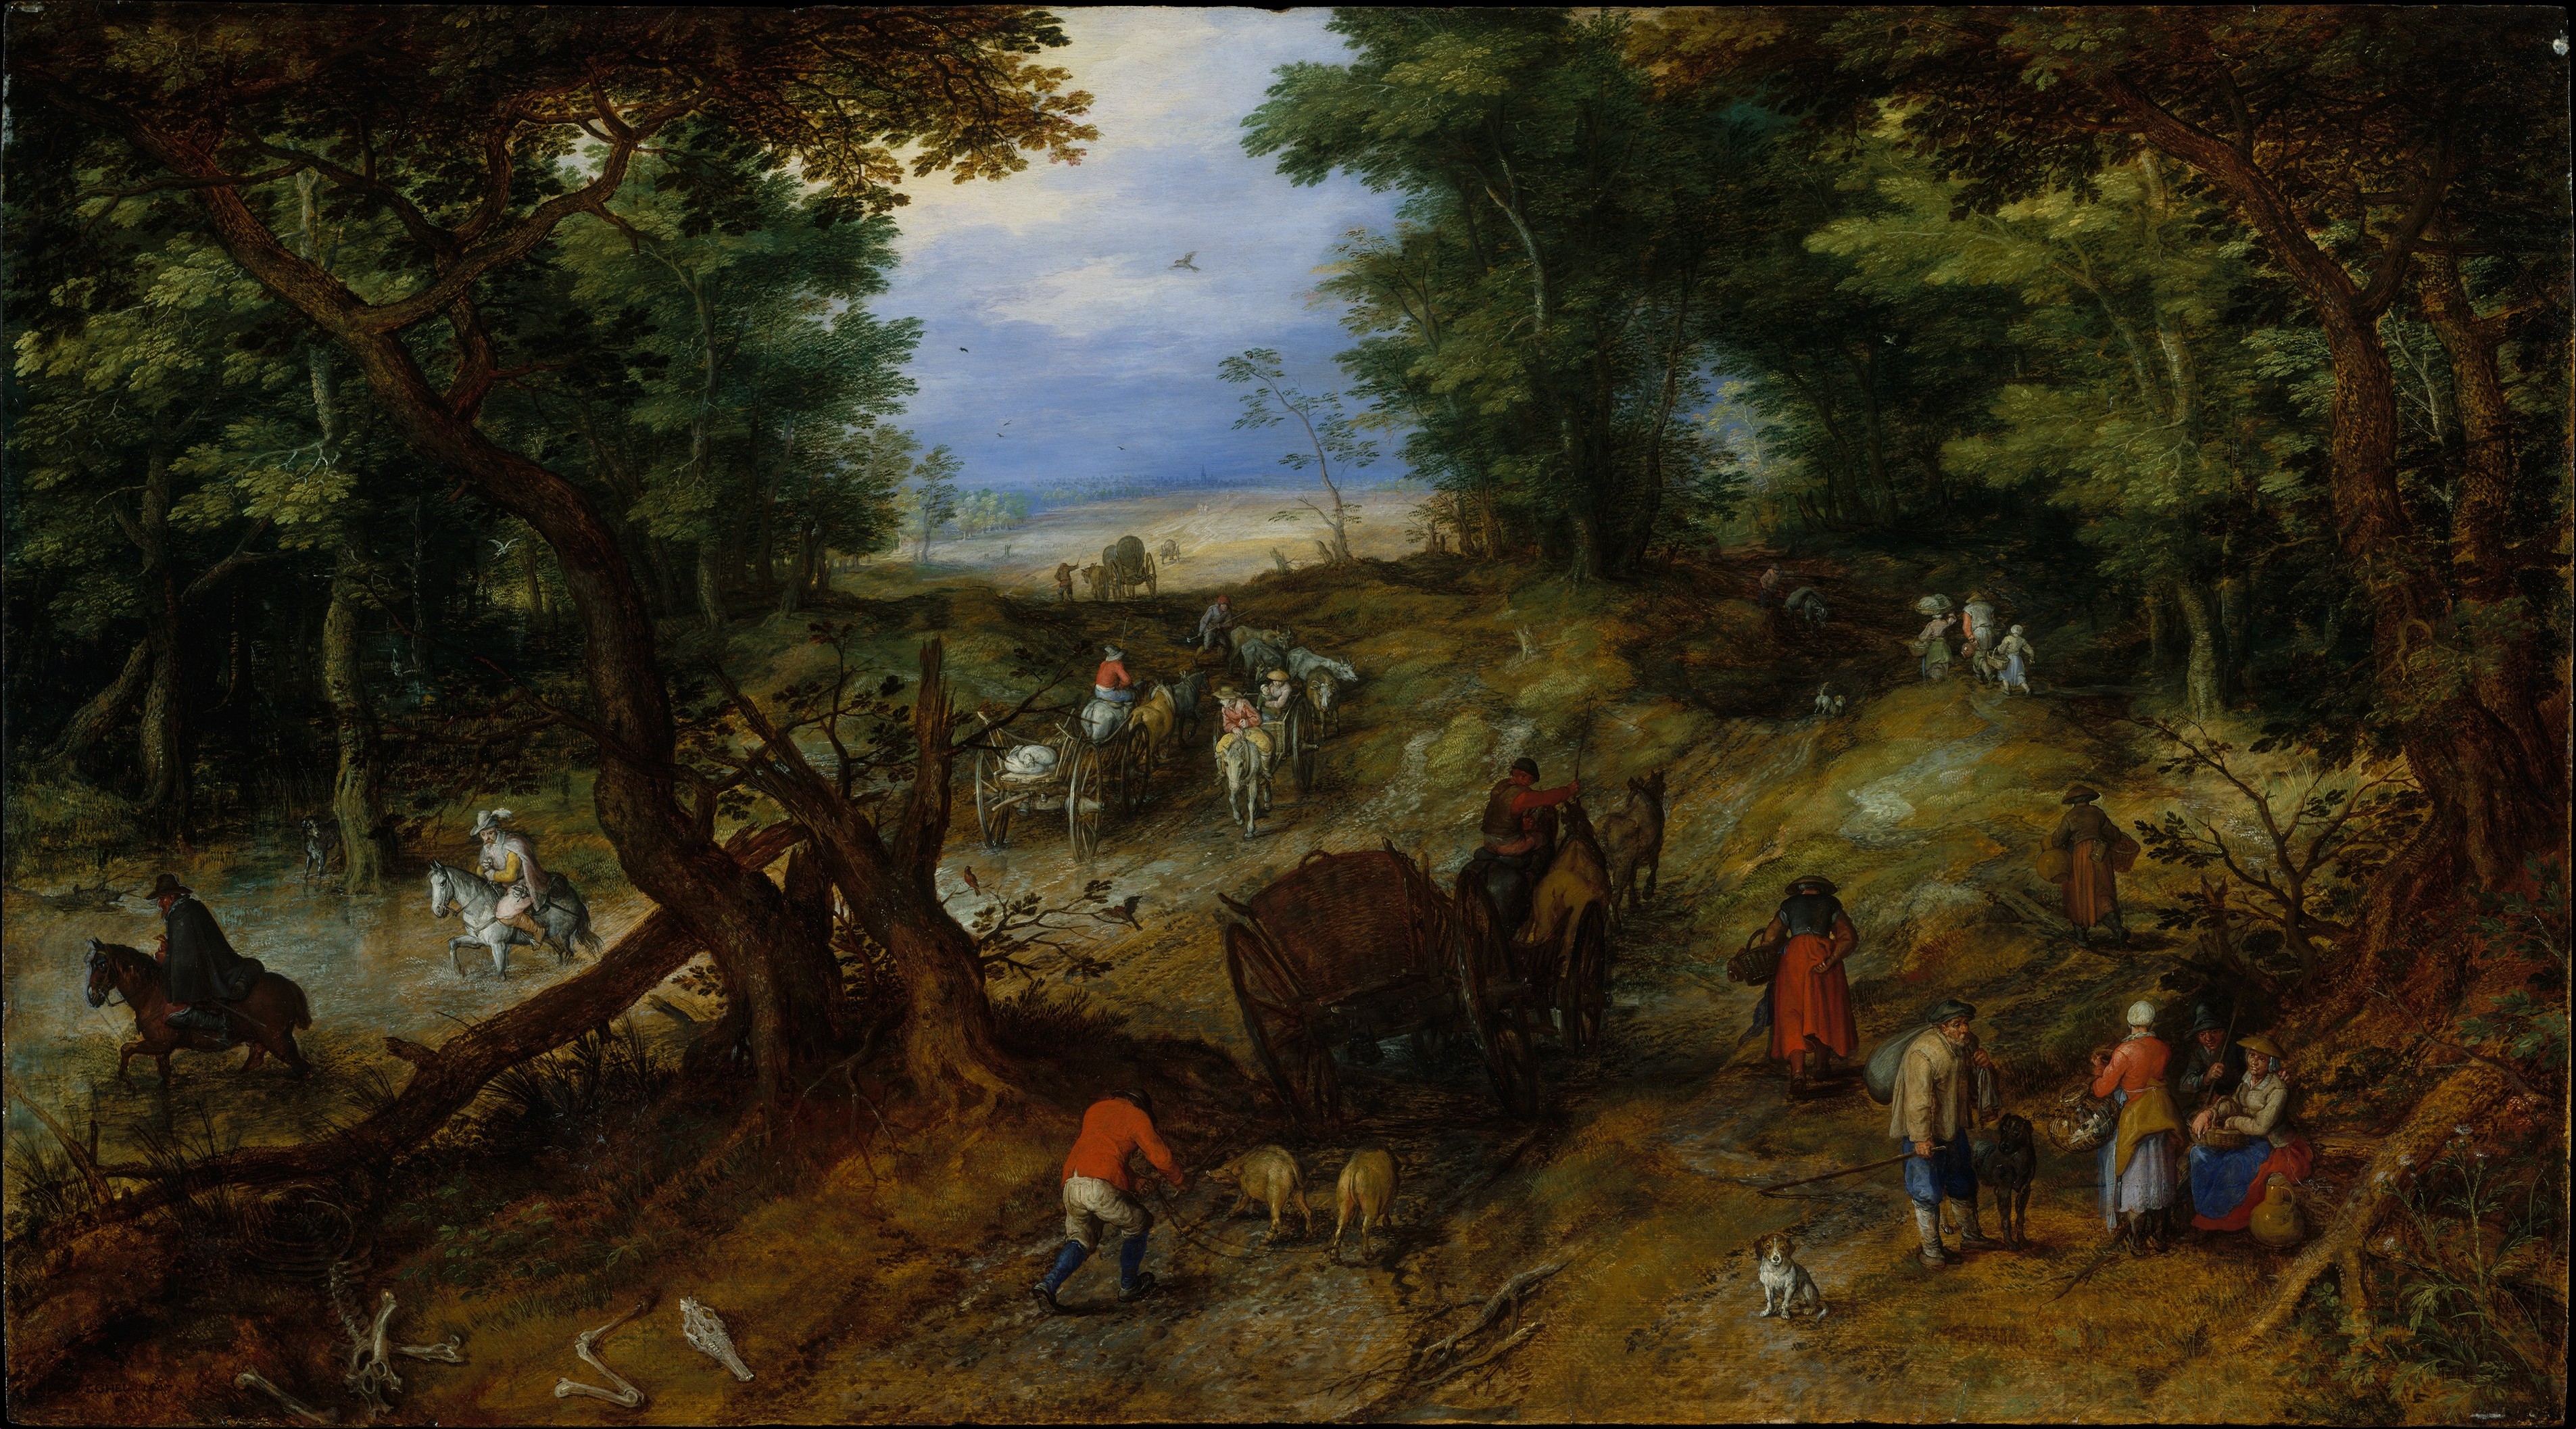 Jan Brueghel (I) - A Woodland Road with Travelers